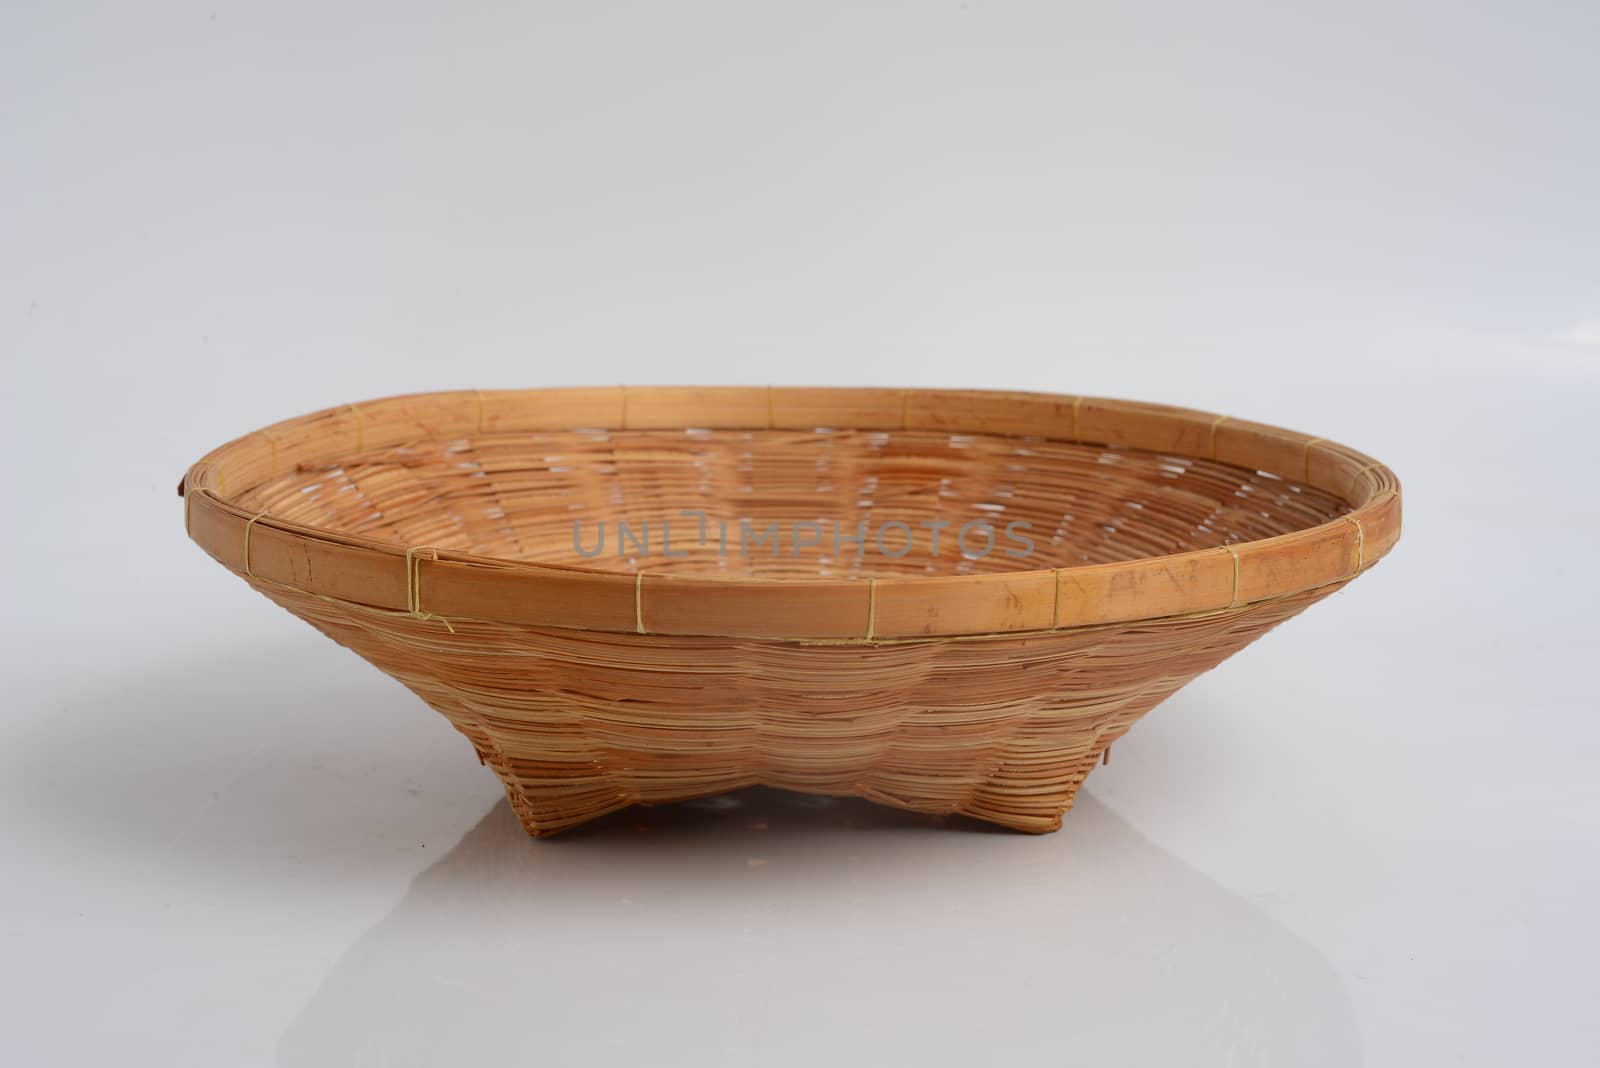 Bamboo wicker basket  on white background.